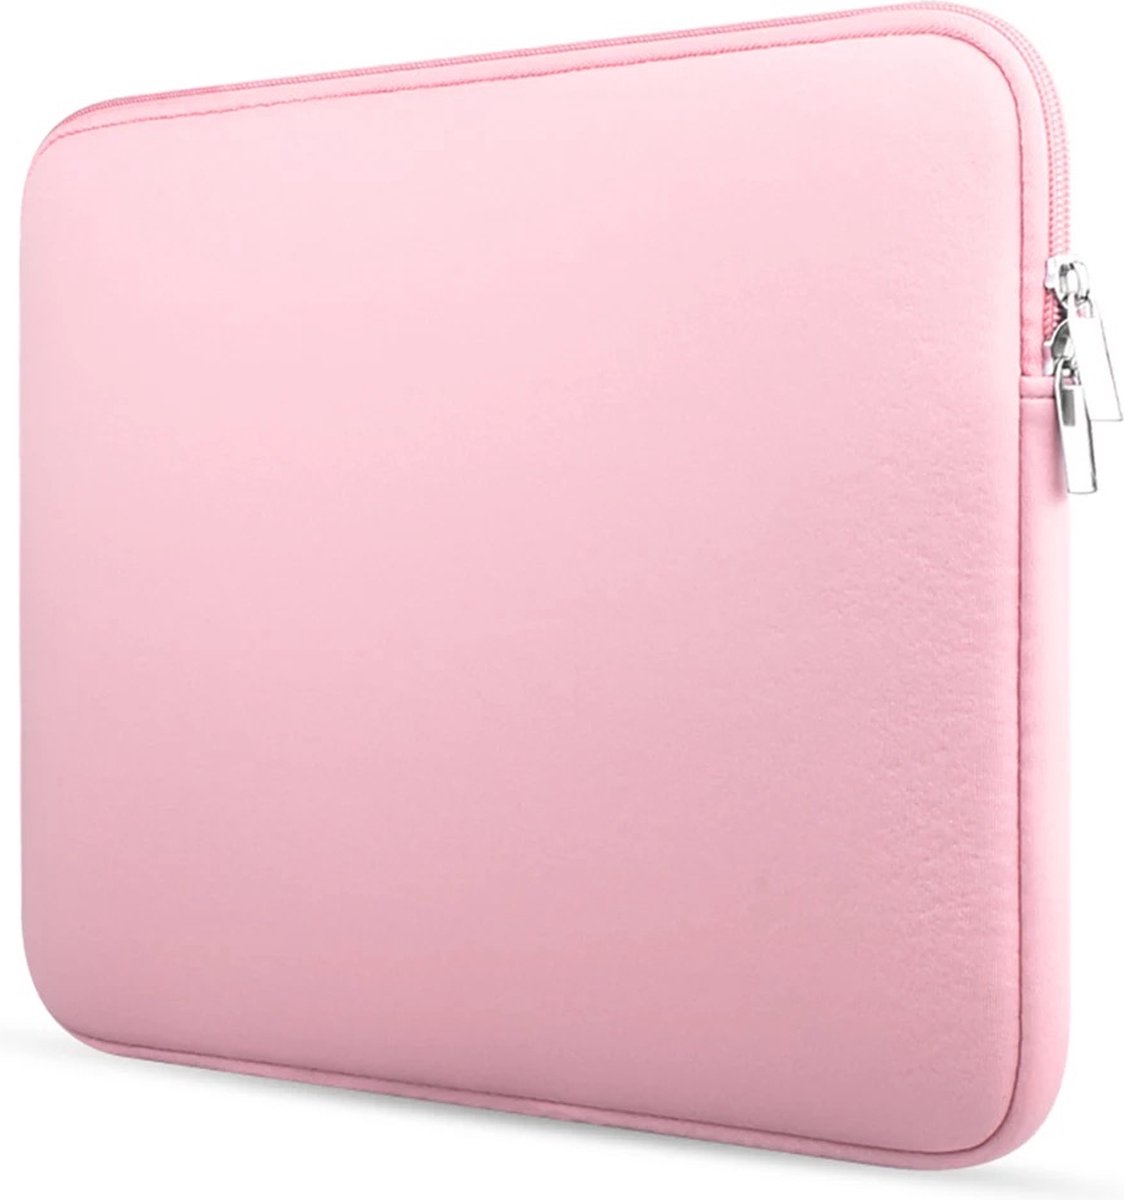 Waterdichte laptopsleeve - Soft Touch - Laptophoes - 11,6 inch - Extra bescherming ( Roze )